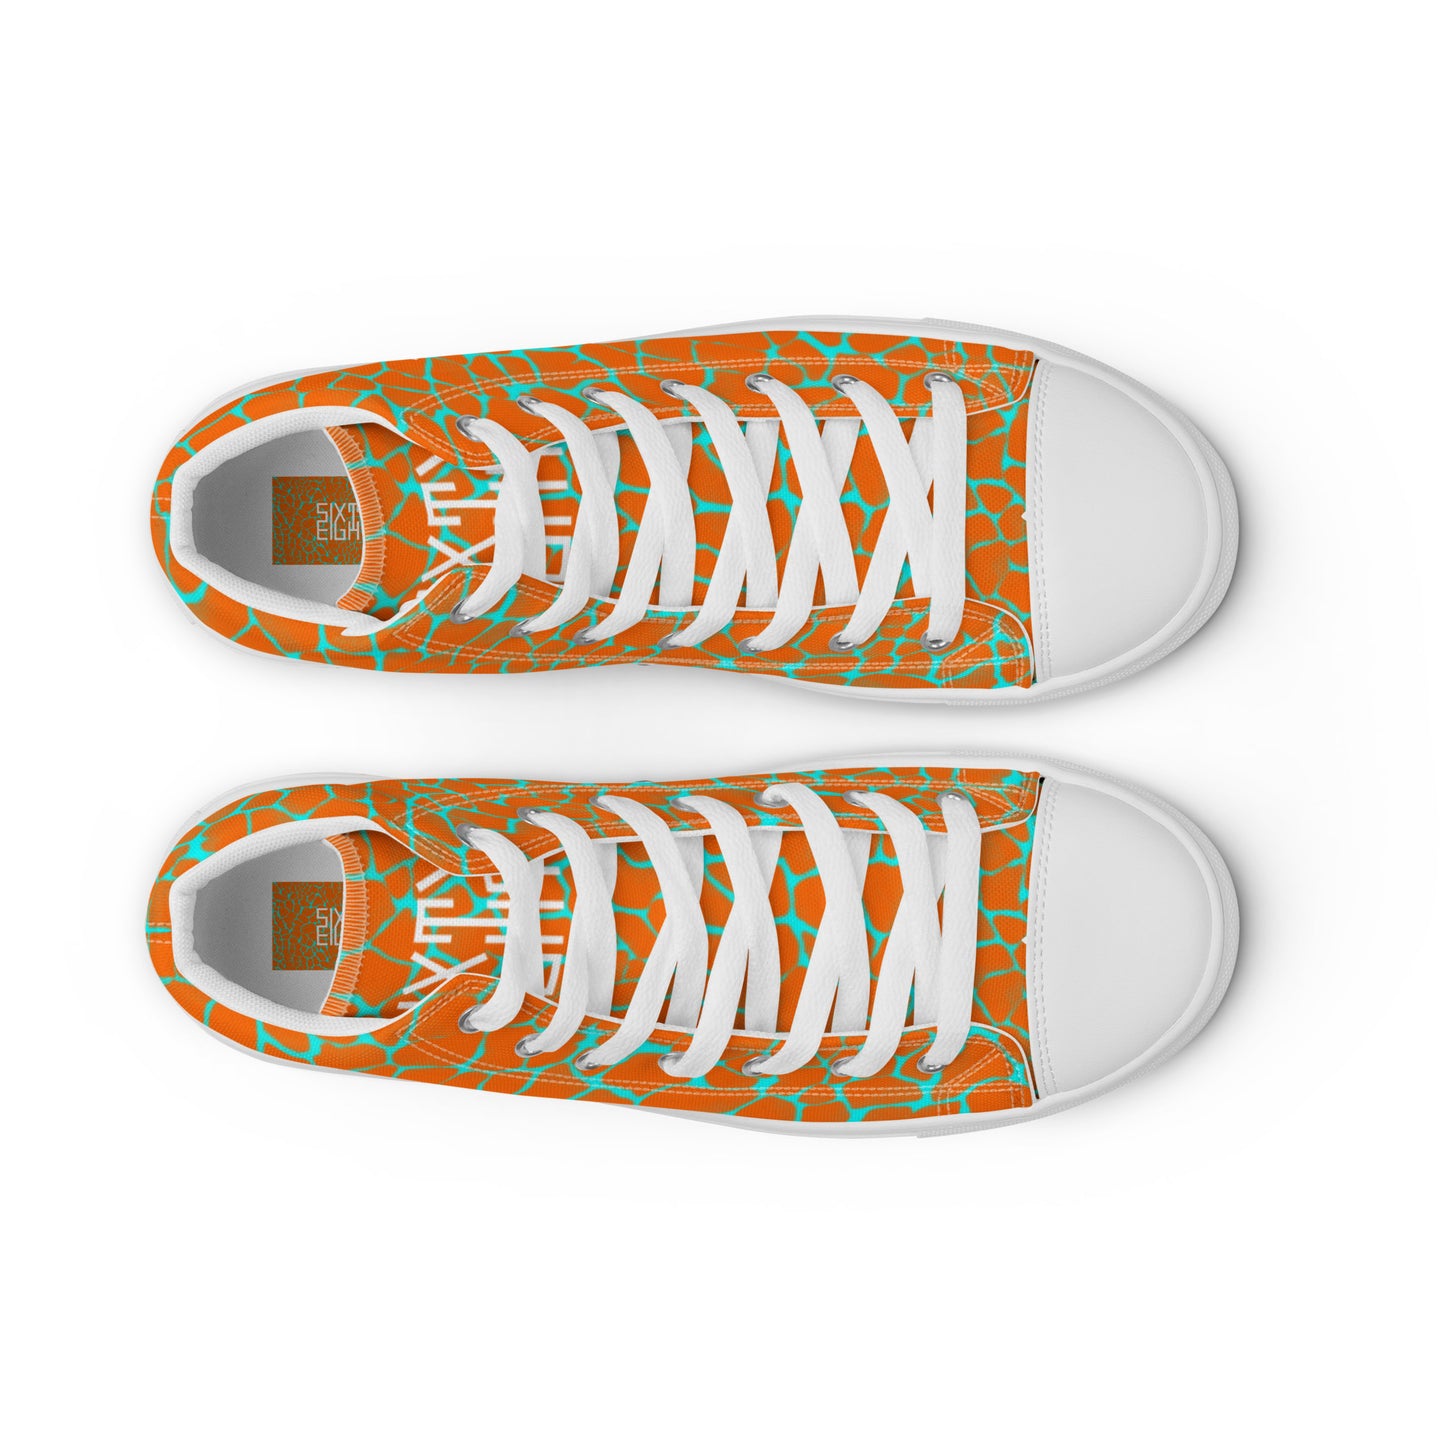 Sixty Eight 93 Logo White Boa Orange & Aqua Blue Women’s High Top Shoes